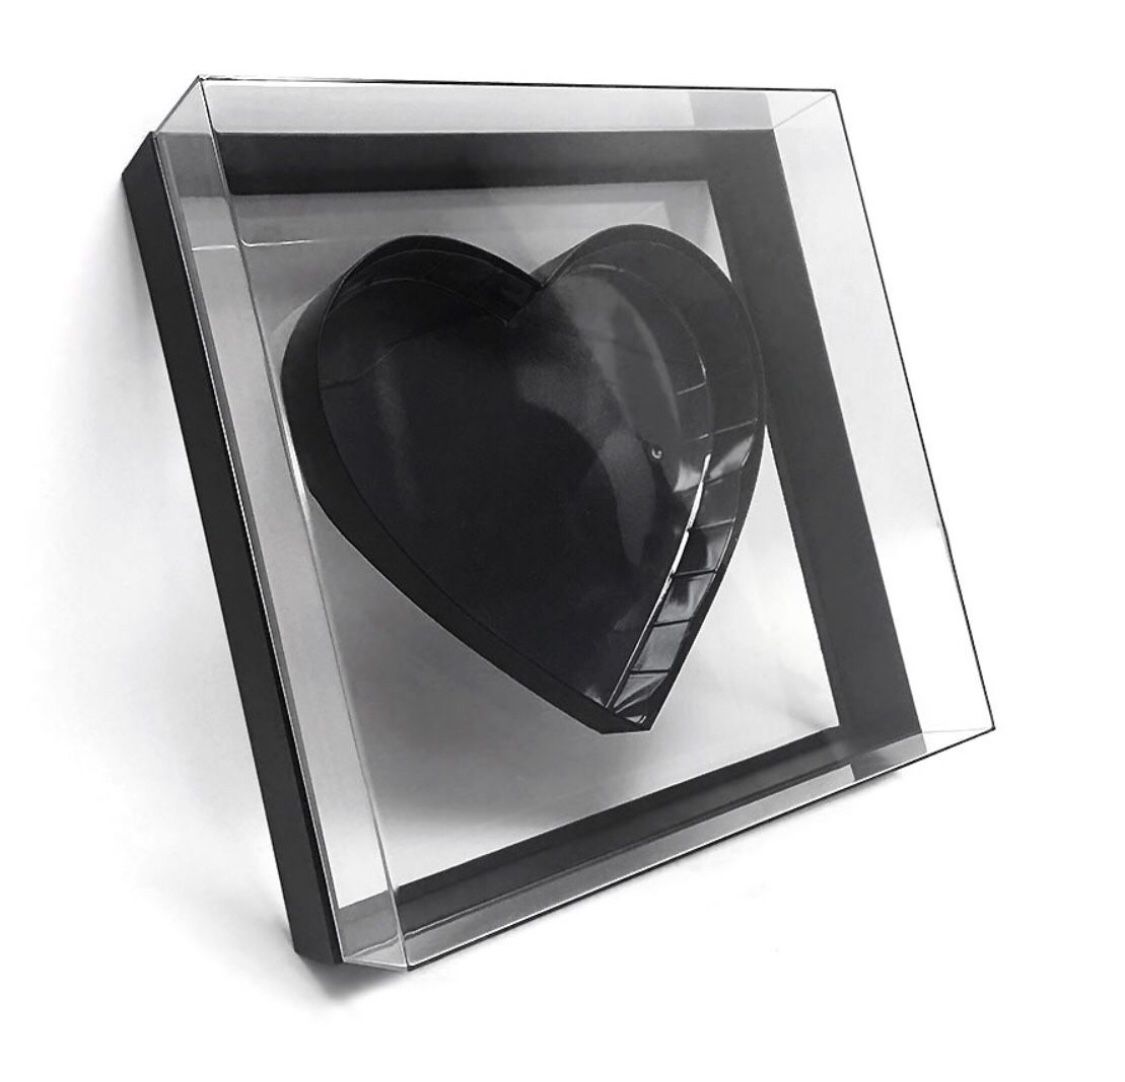 XL Black Transparent Hard Plastics Square Flower Box With Heart Shape In The Middle/Caja de flores cuadrada de plástico duro transparente negra  